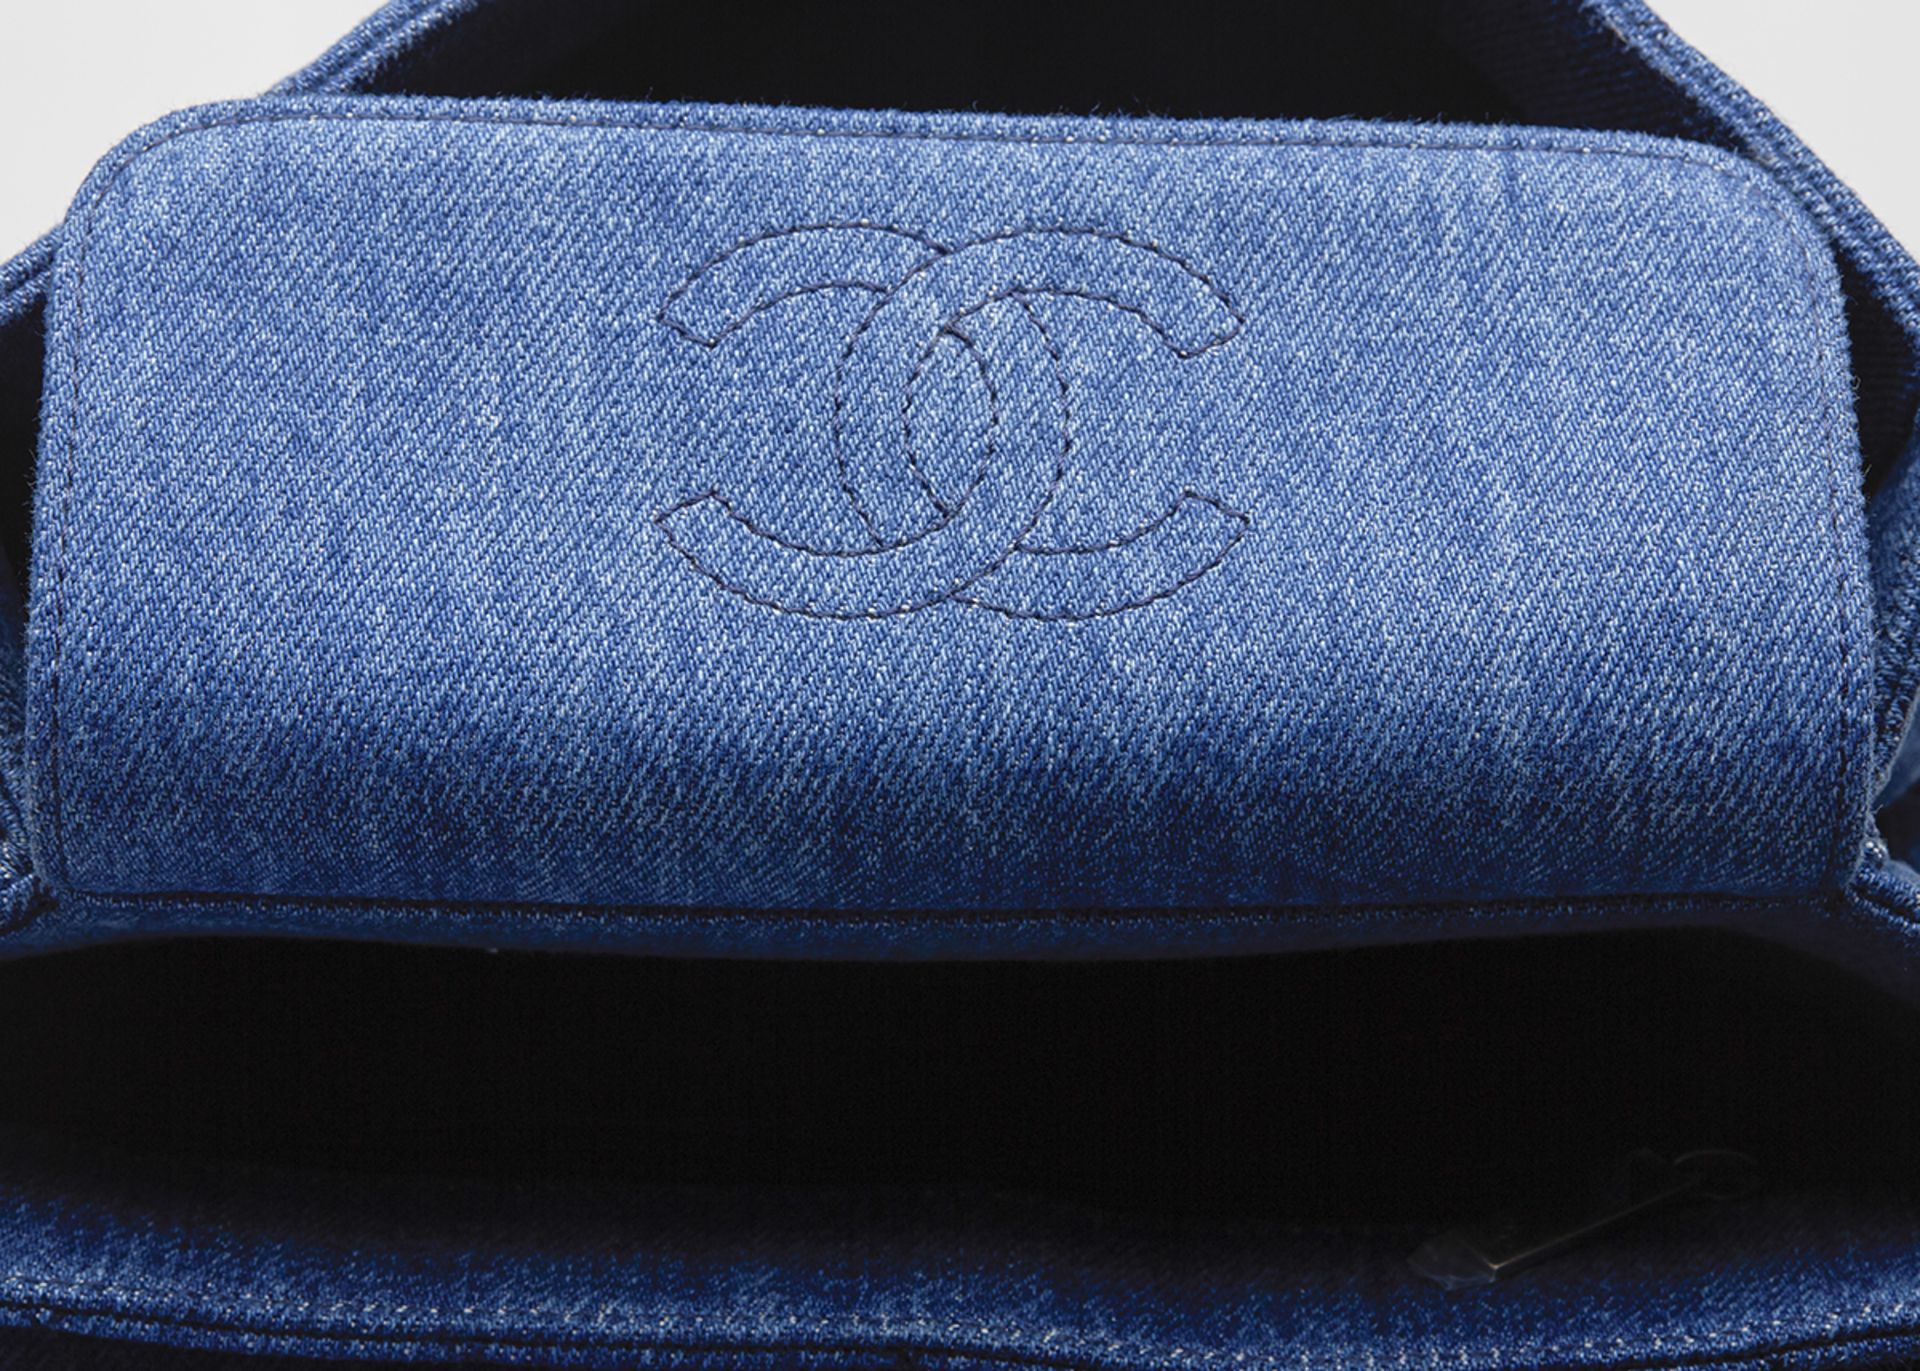 CB029 Chanel - Flap Bag - Image 9 of 10